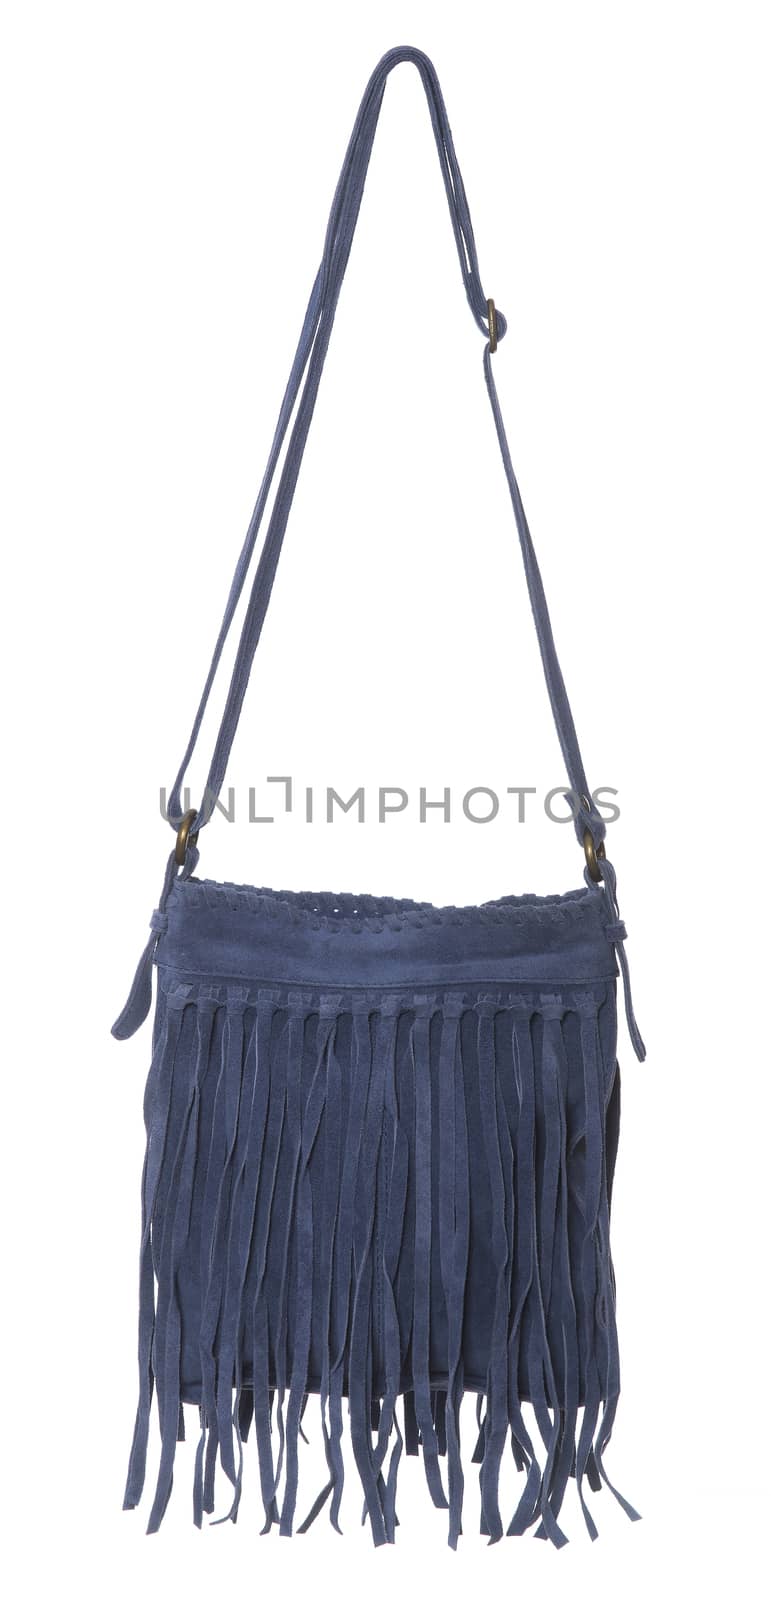 Blue purse by gemenacom